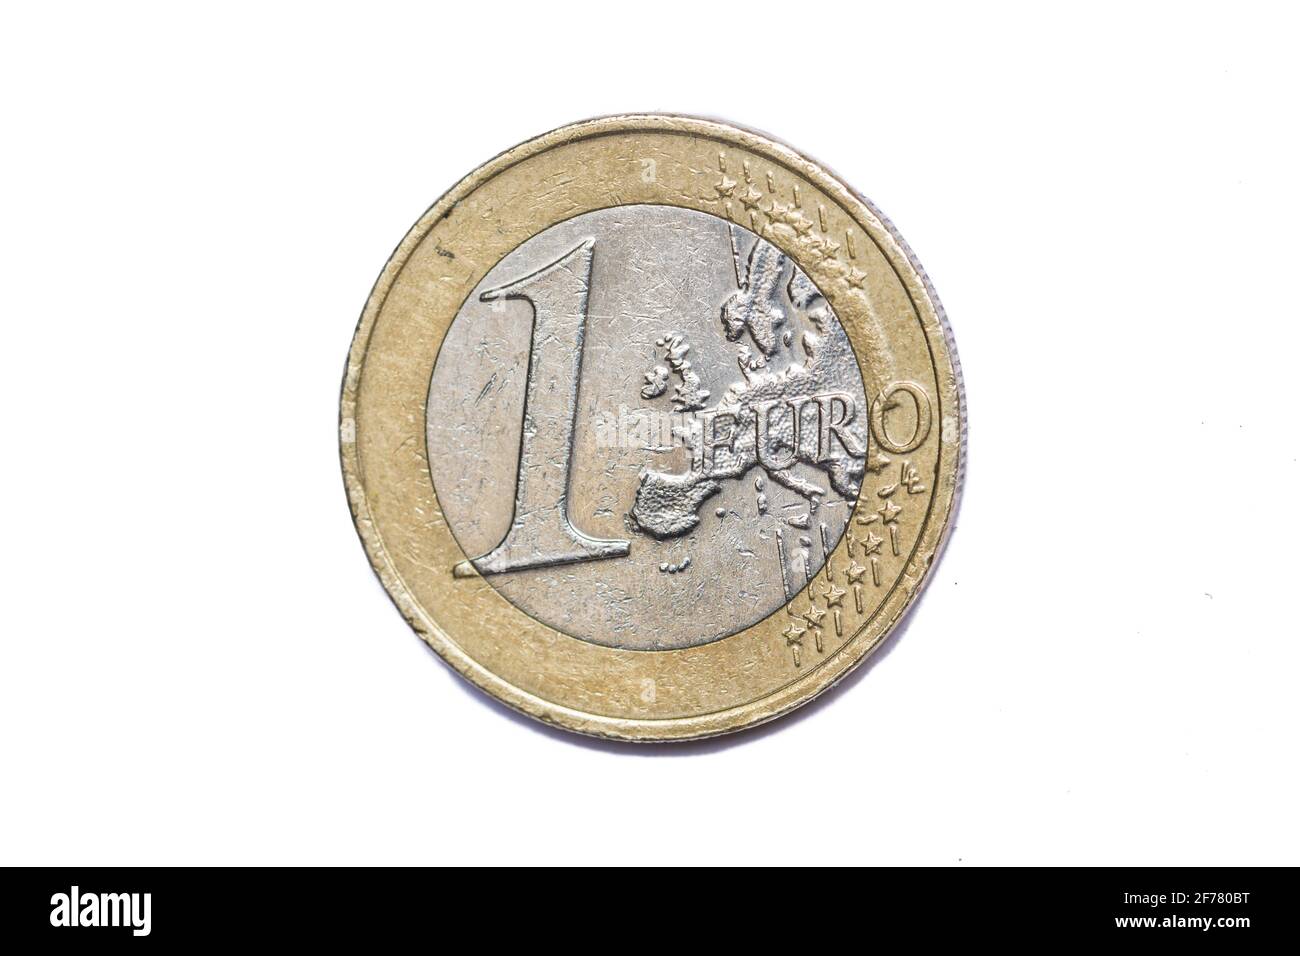 France, official money, euros Stock Photo